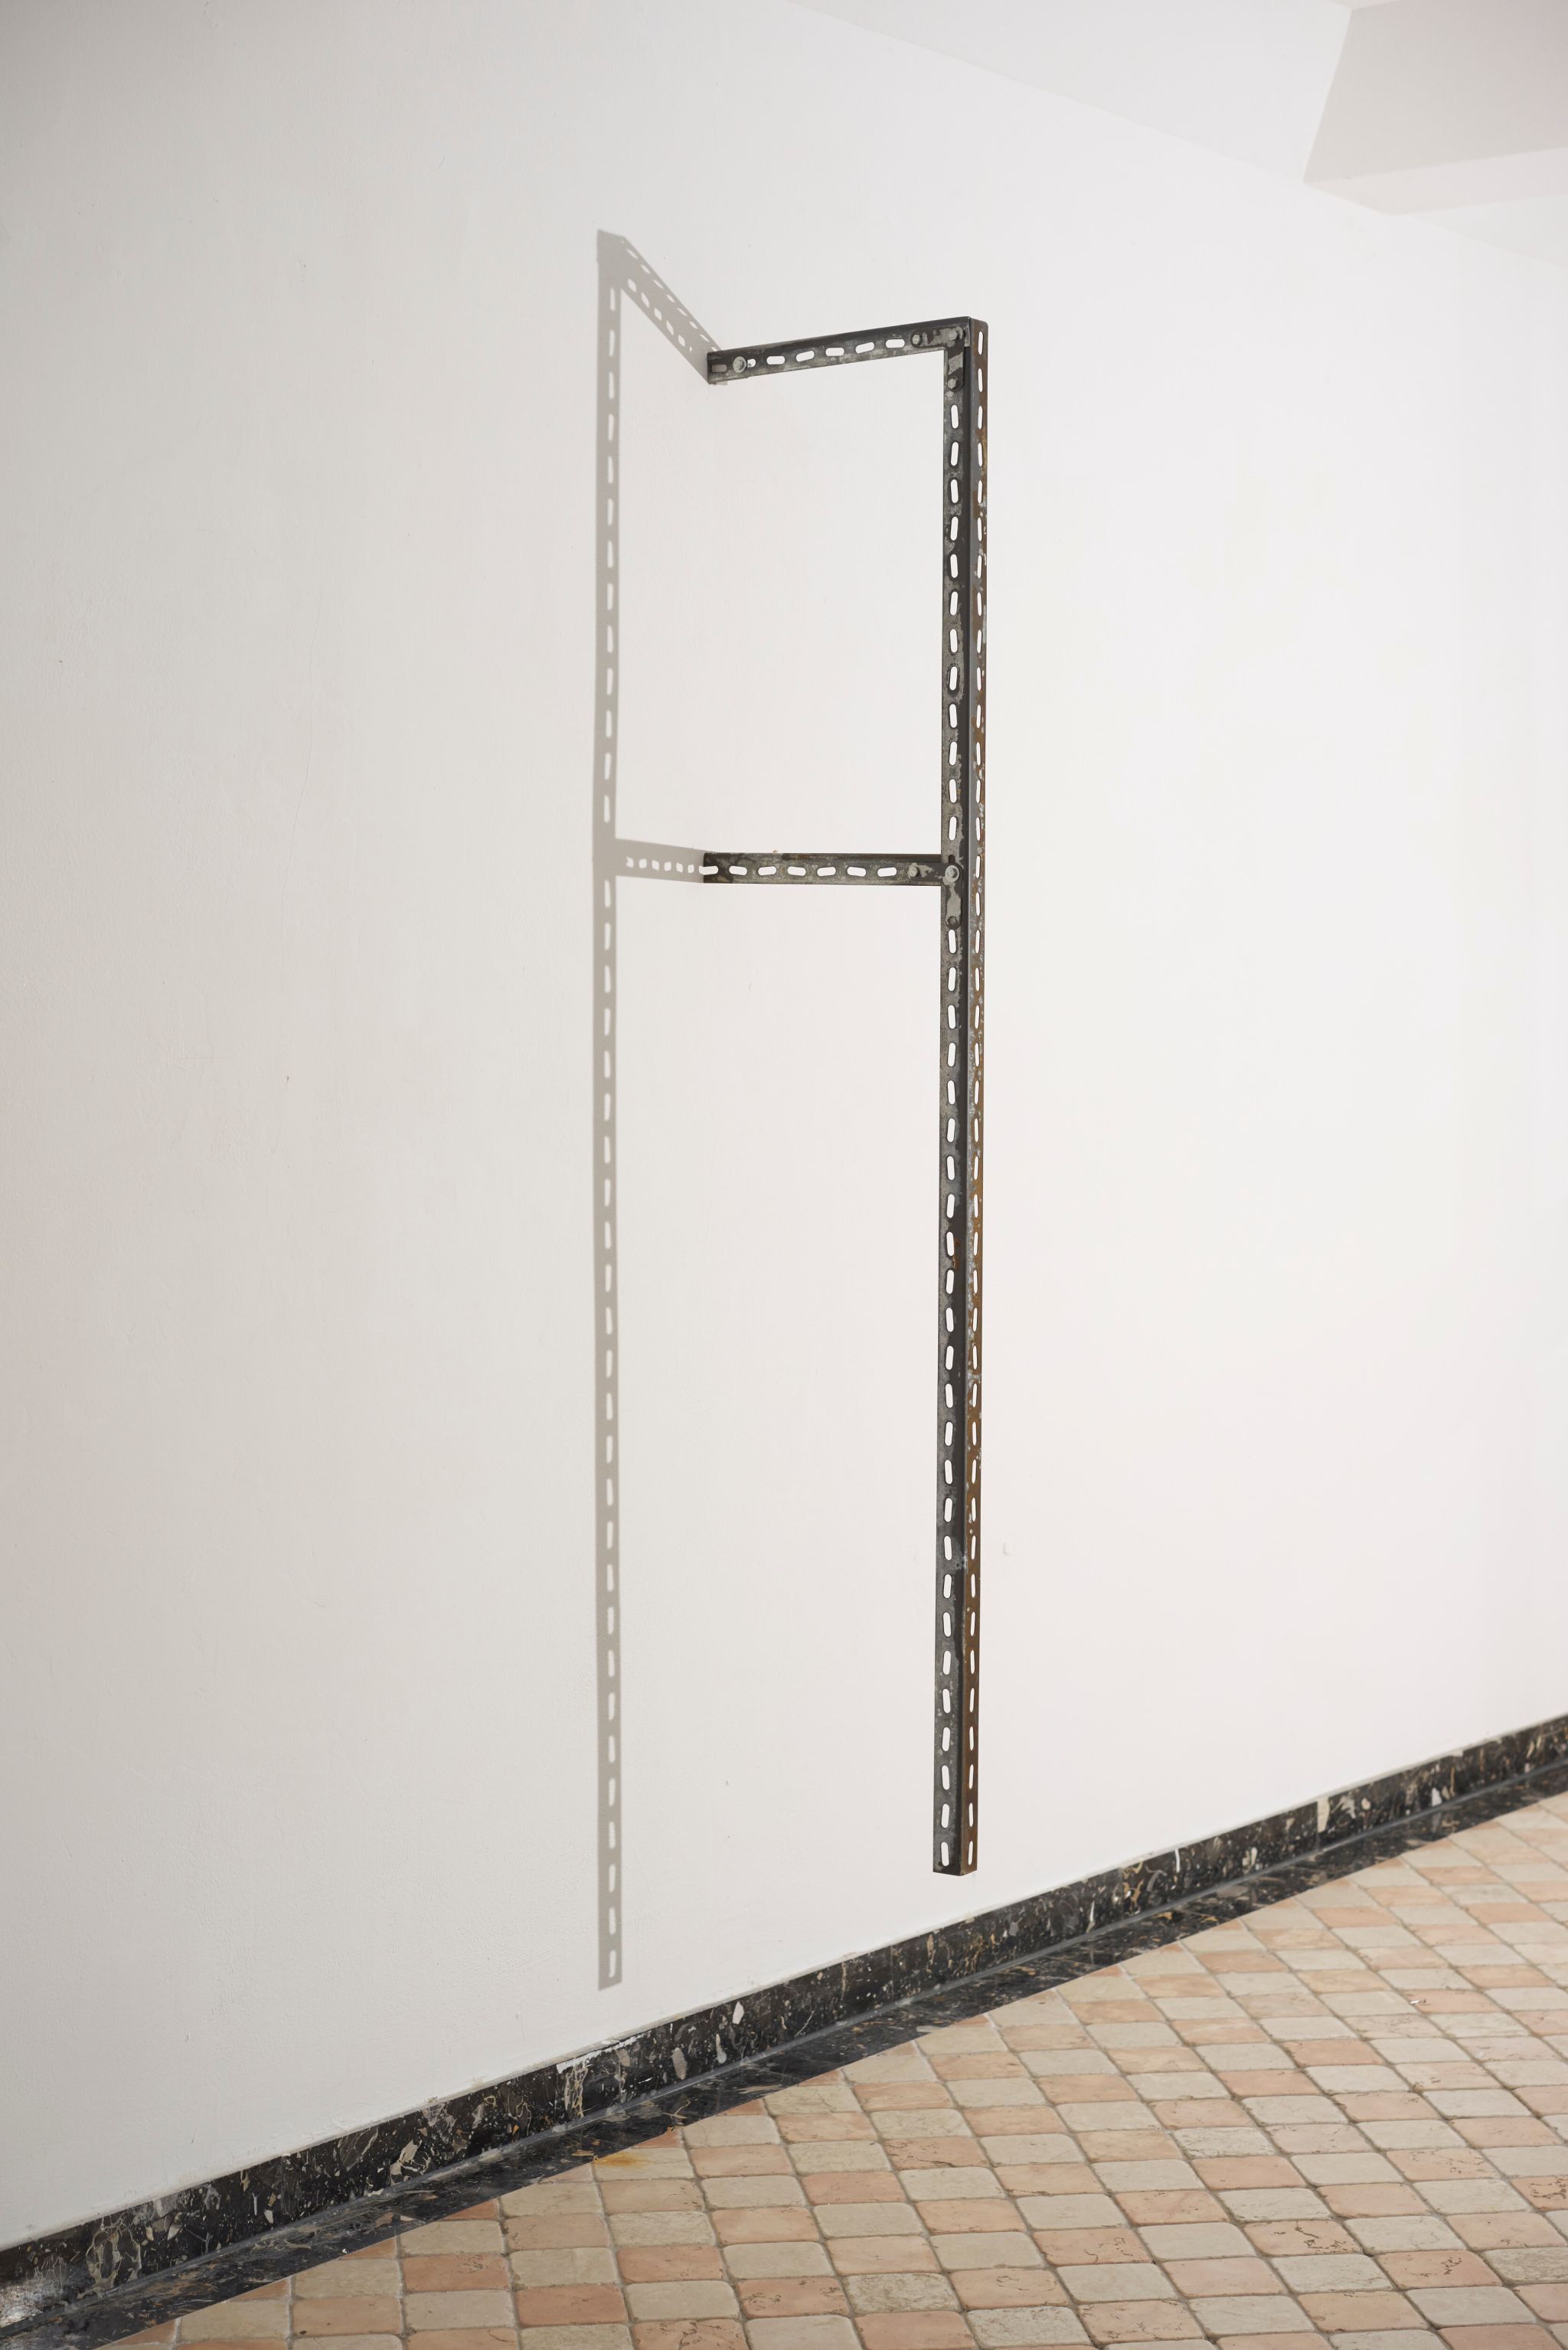 Gerry Bibby, Shadow Inventory (Autobahn), 2017, Metal, floodlight, 165 ⁠× ⁠5 ⁠× ⁠35 ⁠⁠cm